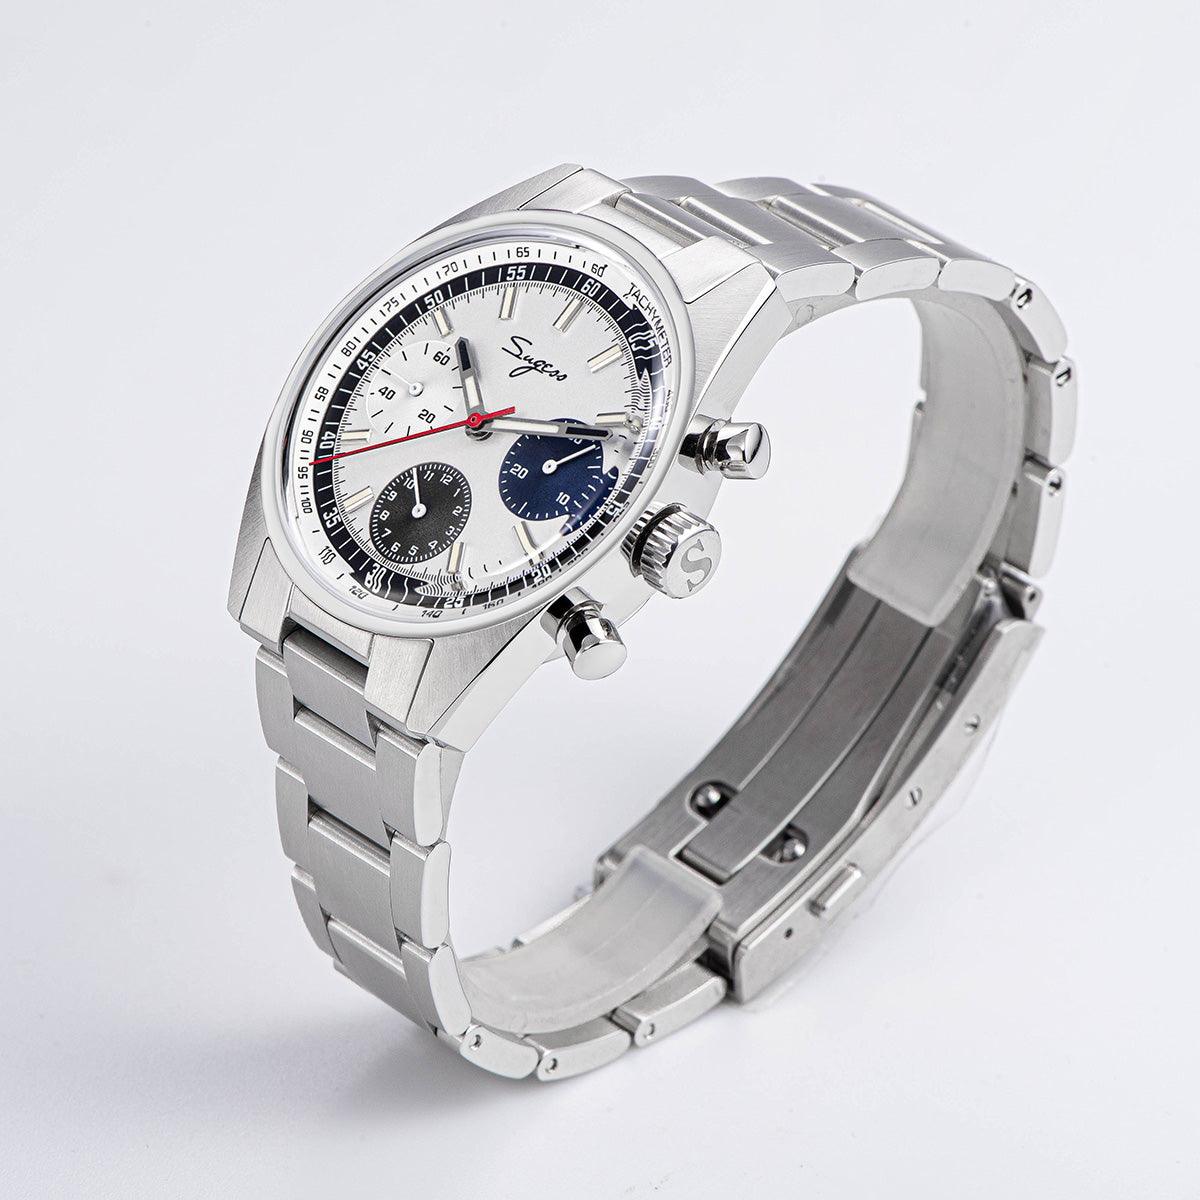 Sugess chronograph men's watch 19 mechanical men's watch luminous sapphire waterproof retro fashion Sea-gull movement men's watch - Murphy Johnson Watches Co.